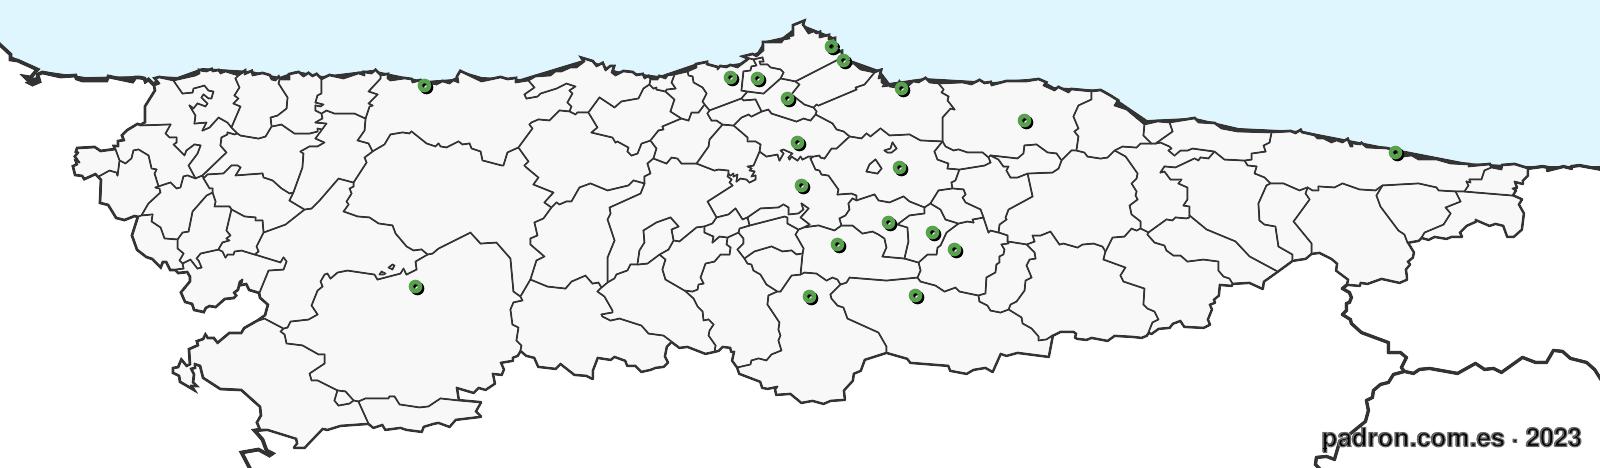 azerbaiyanos en asturias.